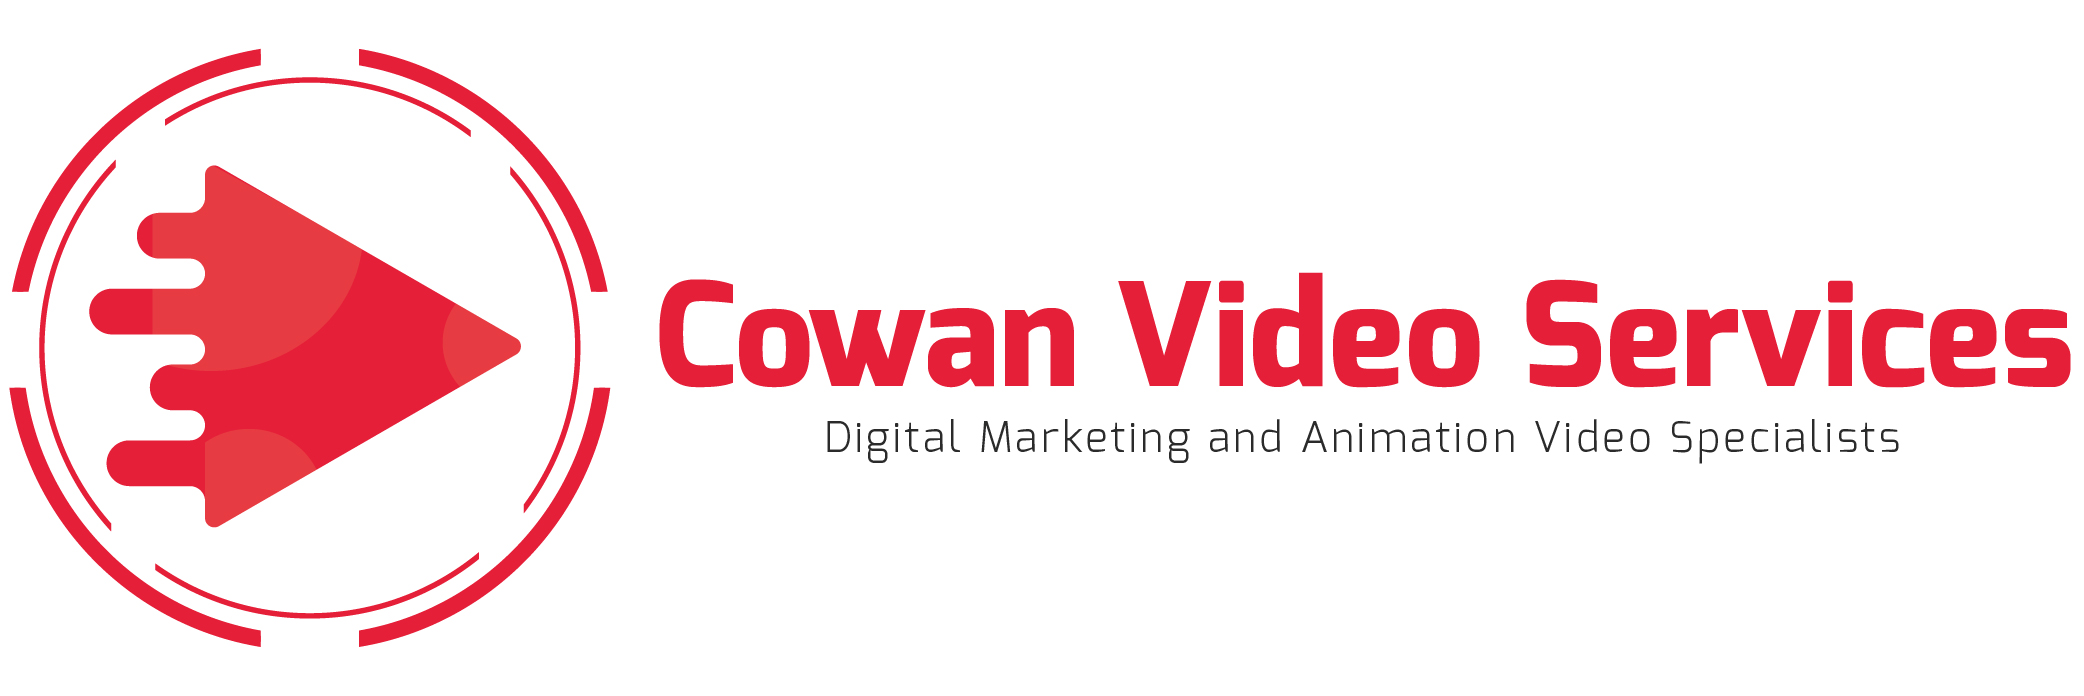 Cowan Video Services Video Place